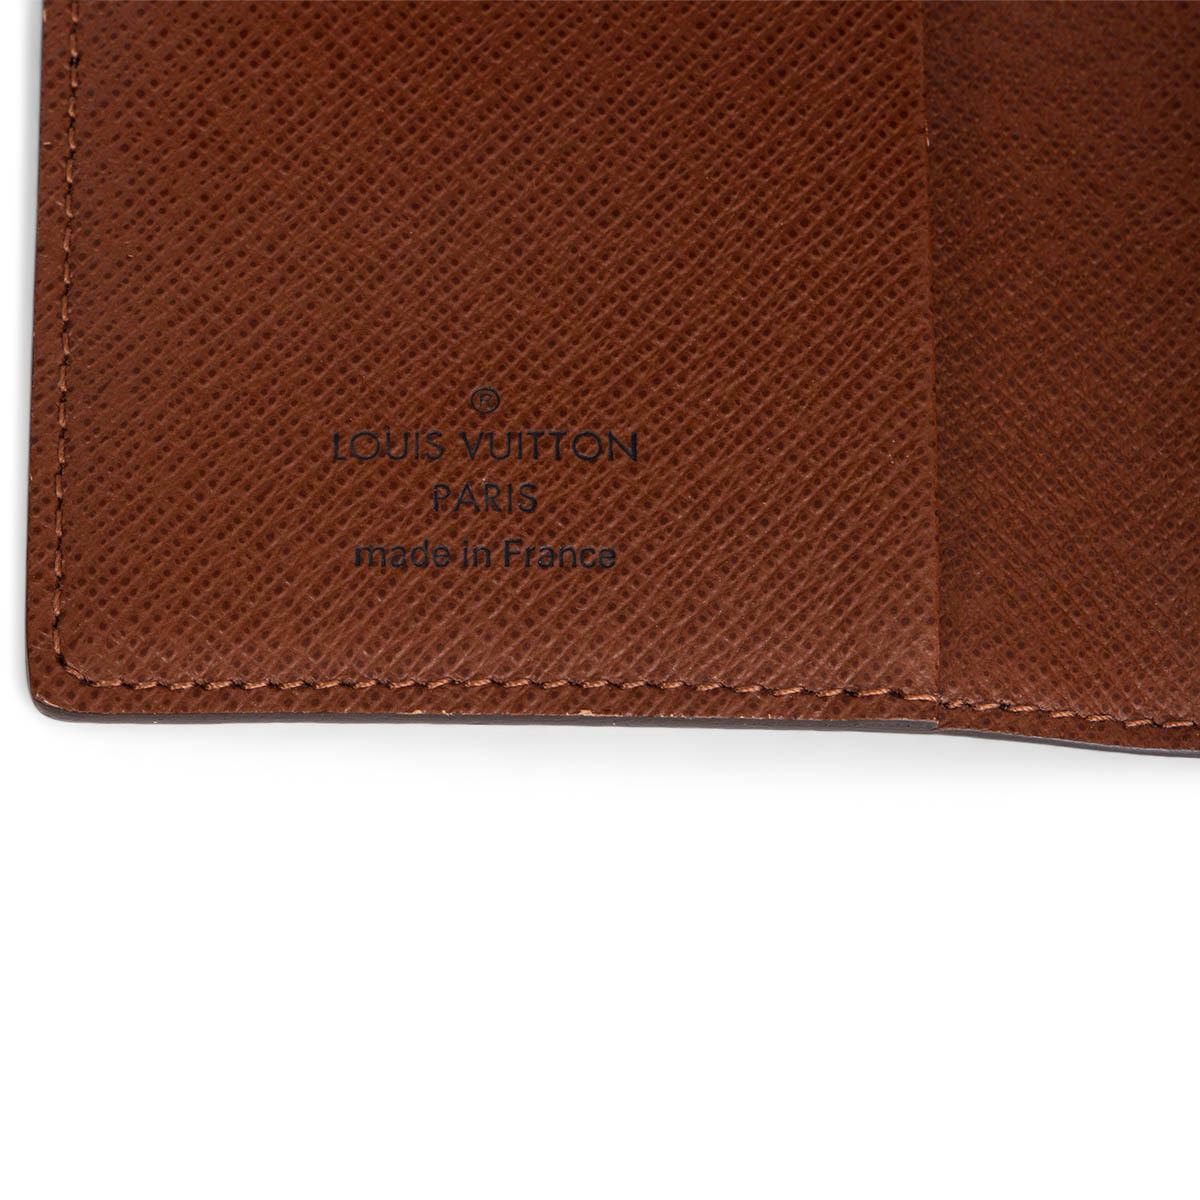 Black LOUIS VUITTON brown Monogram Canvas Credit Card Holder Wallet